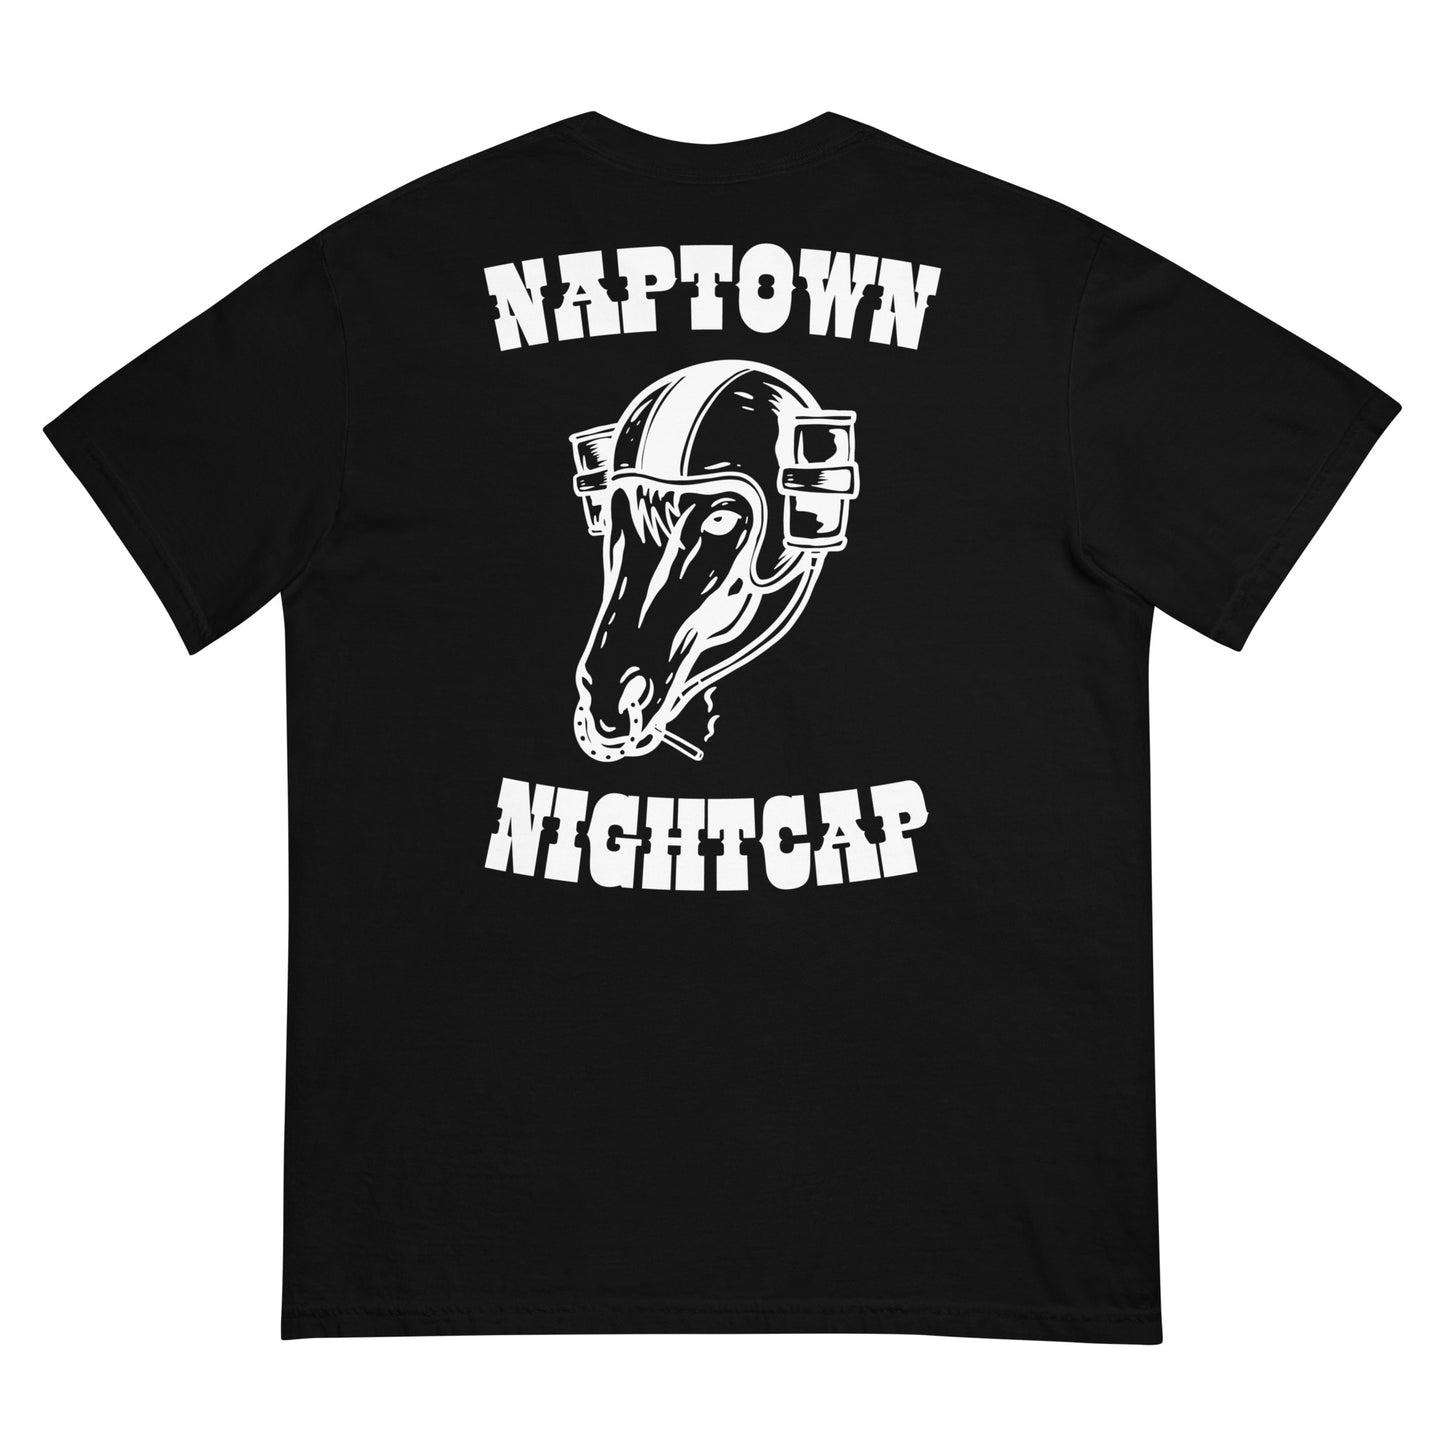 Naptown Light Front/Back